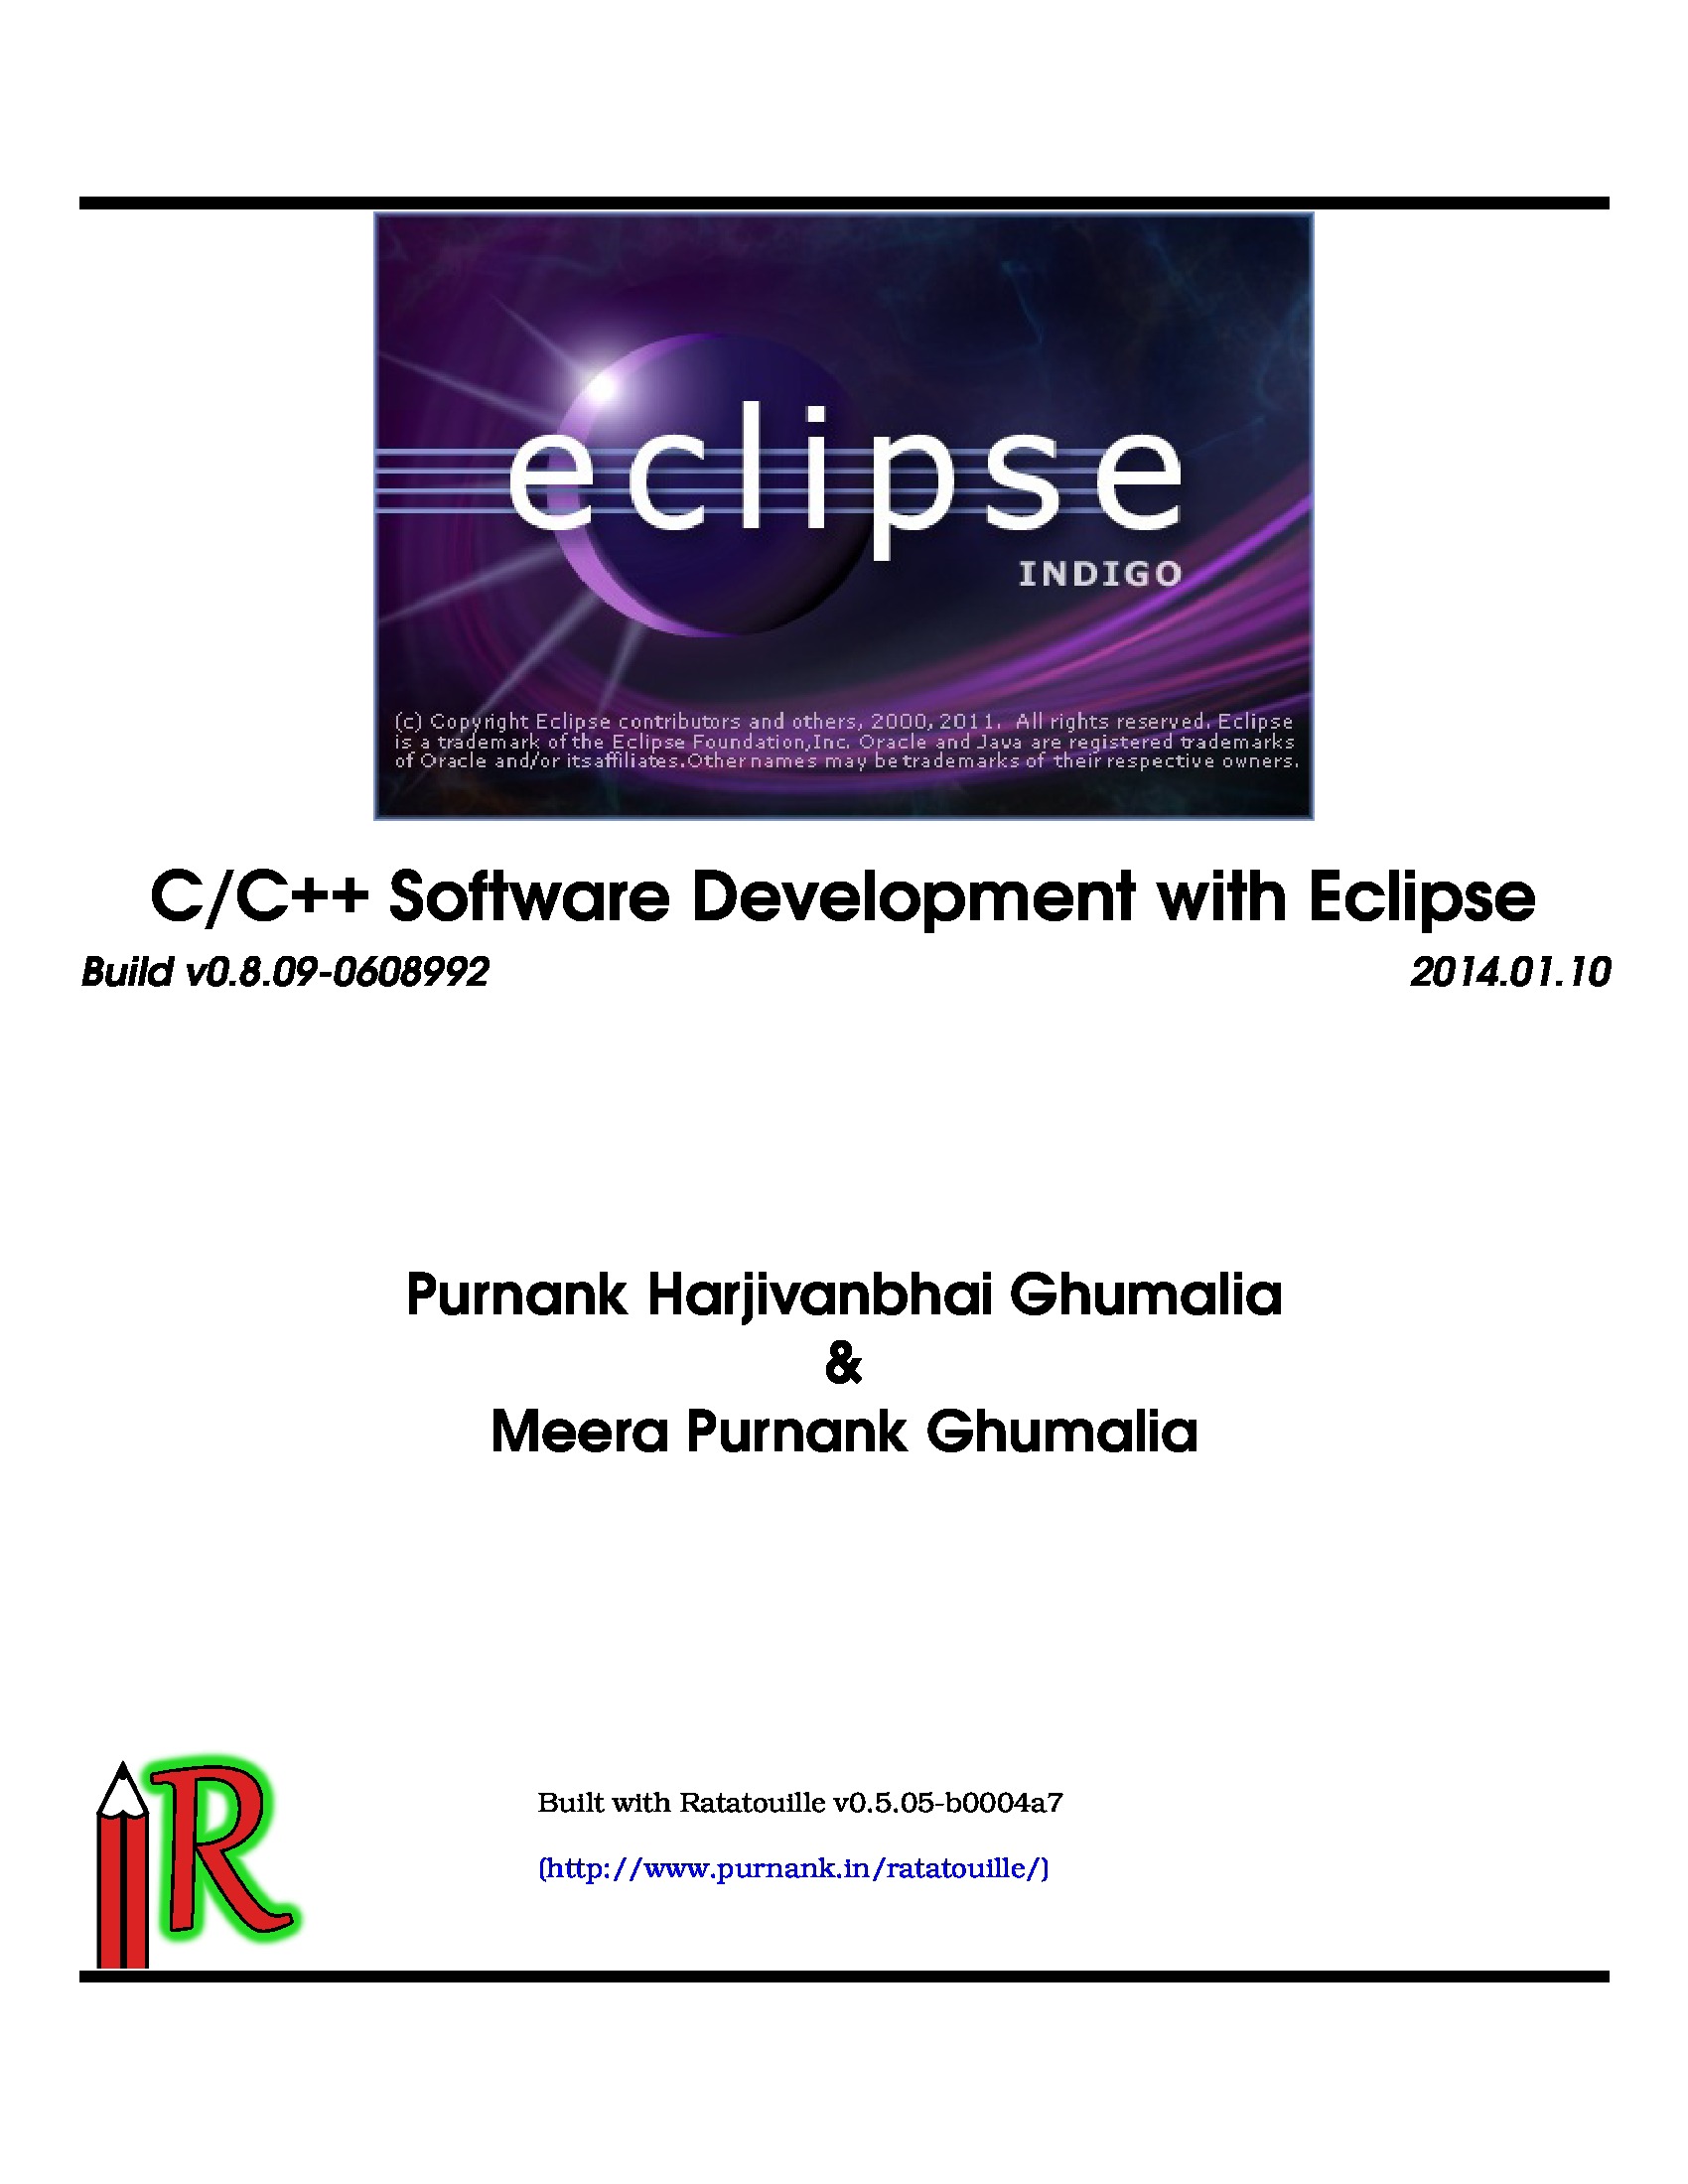 eclipse development c